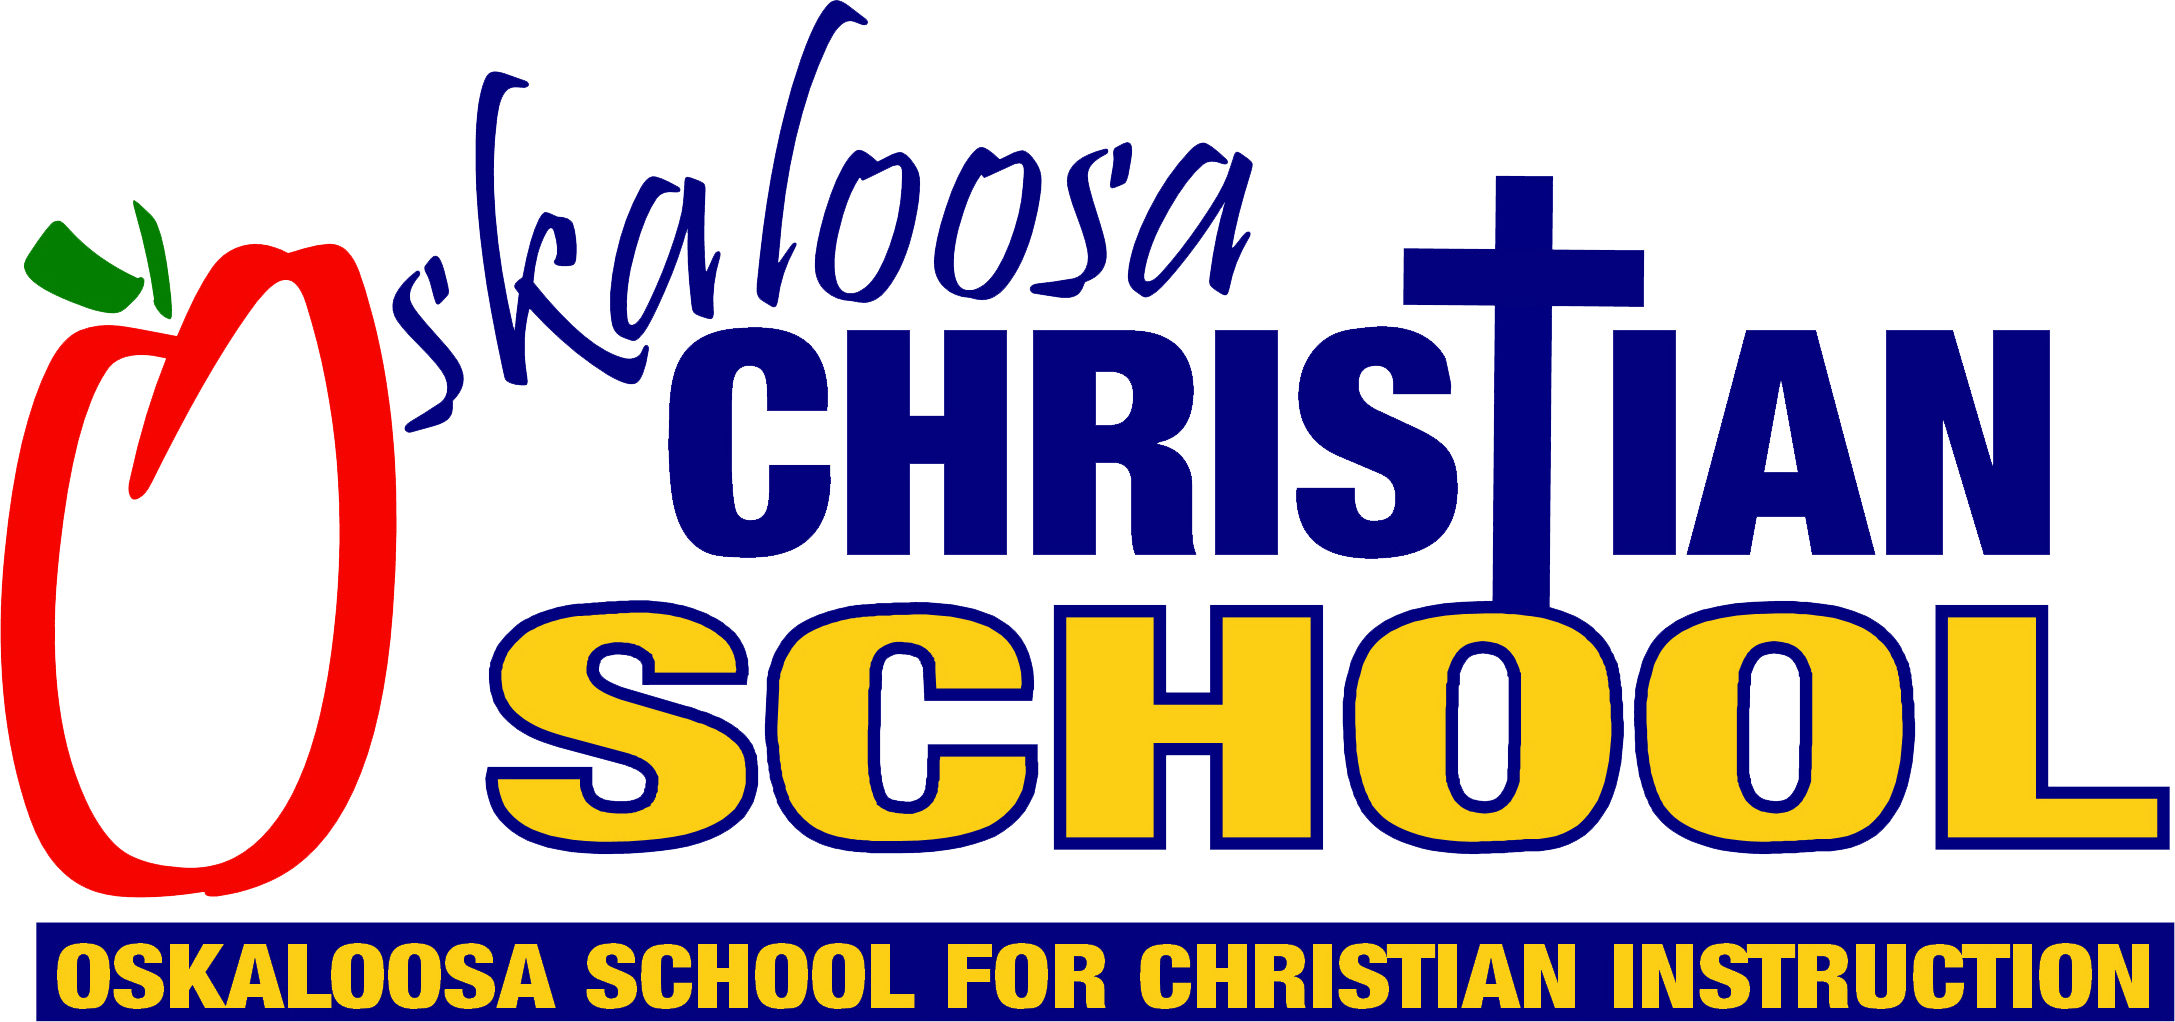 Oskaloosa Christian School